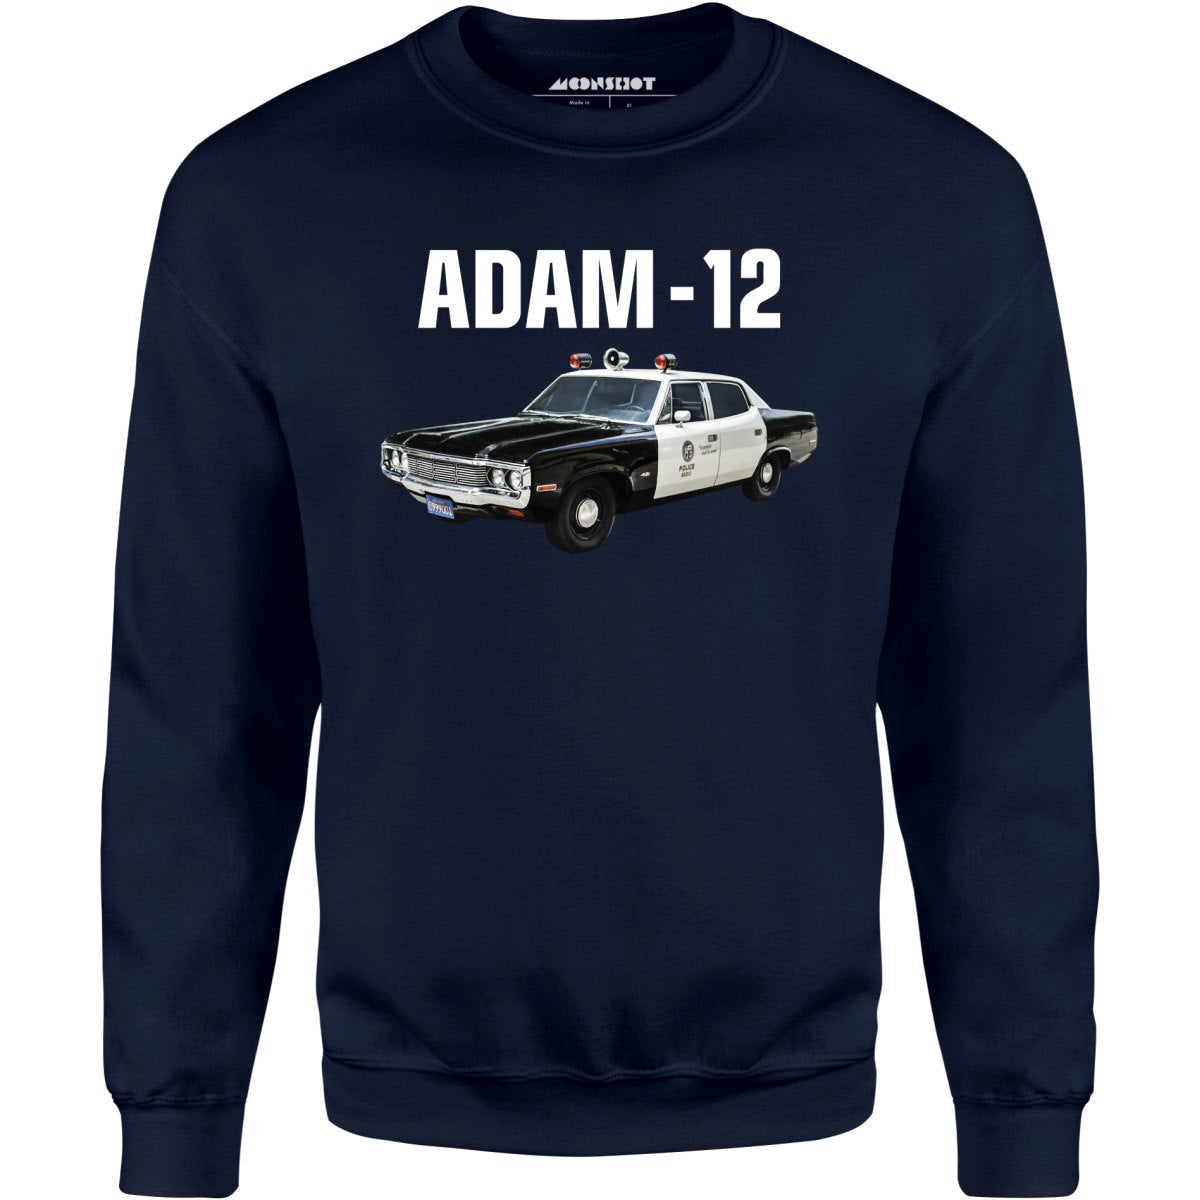 Adam-12 - Unisex Sweatshirt